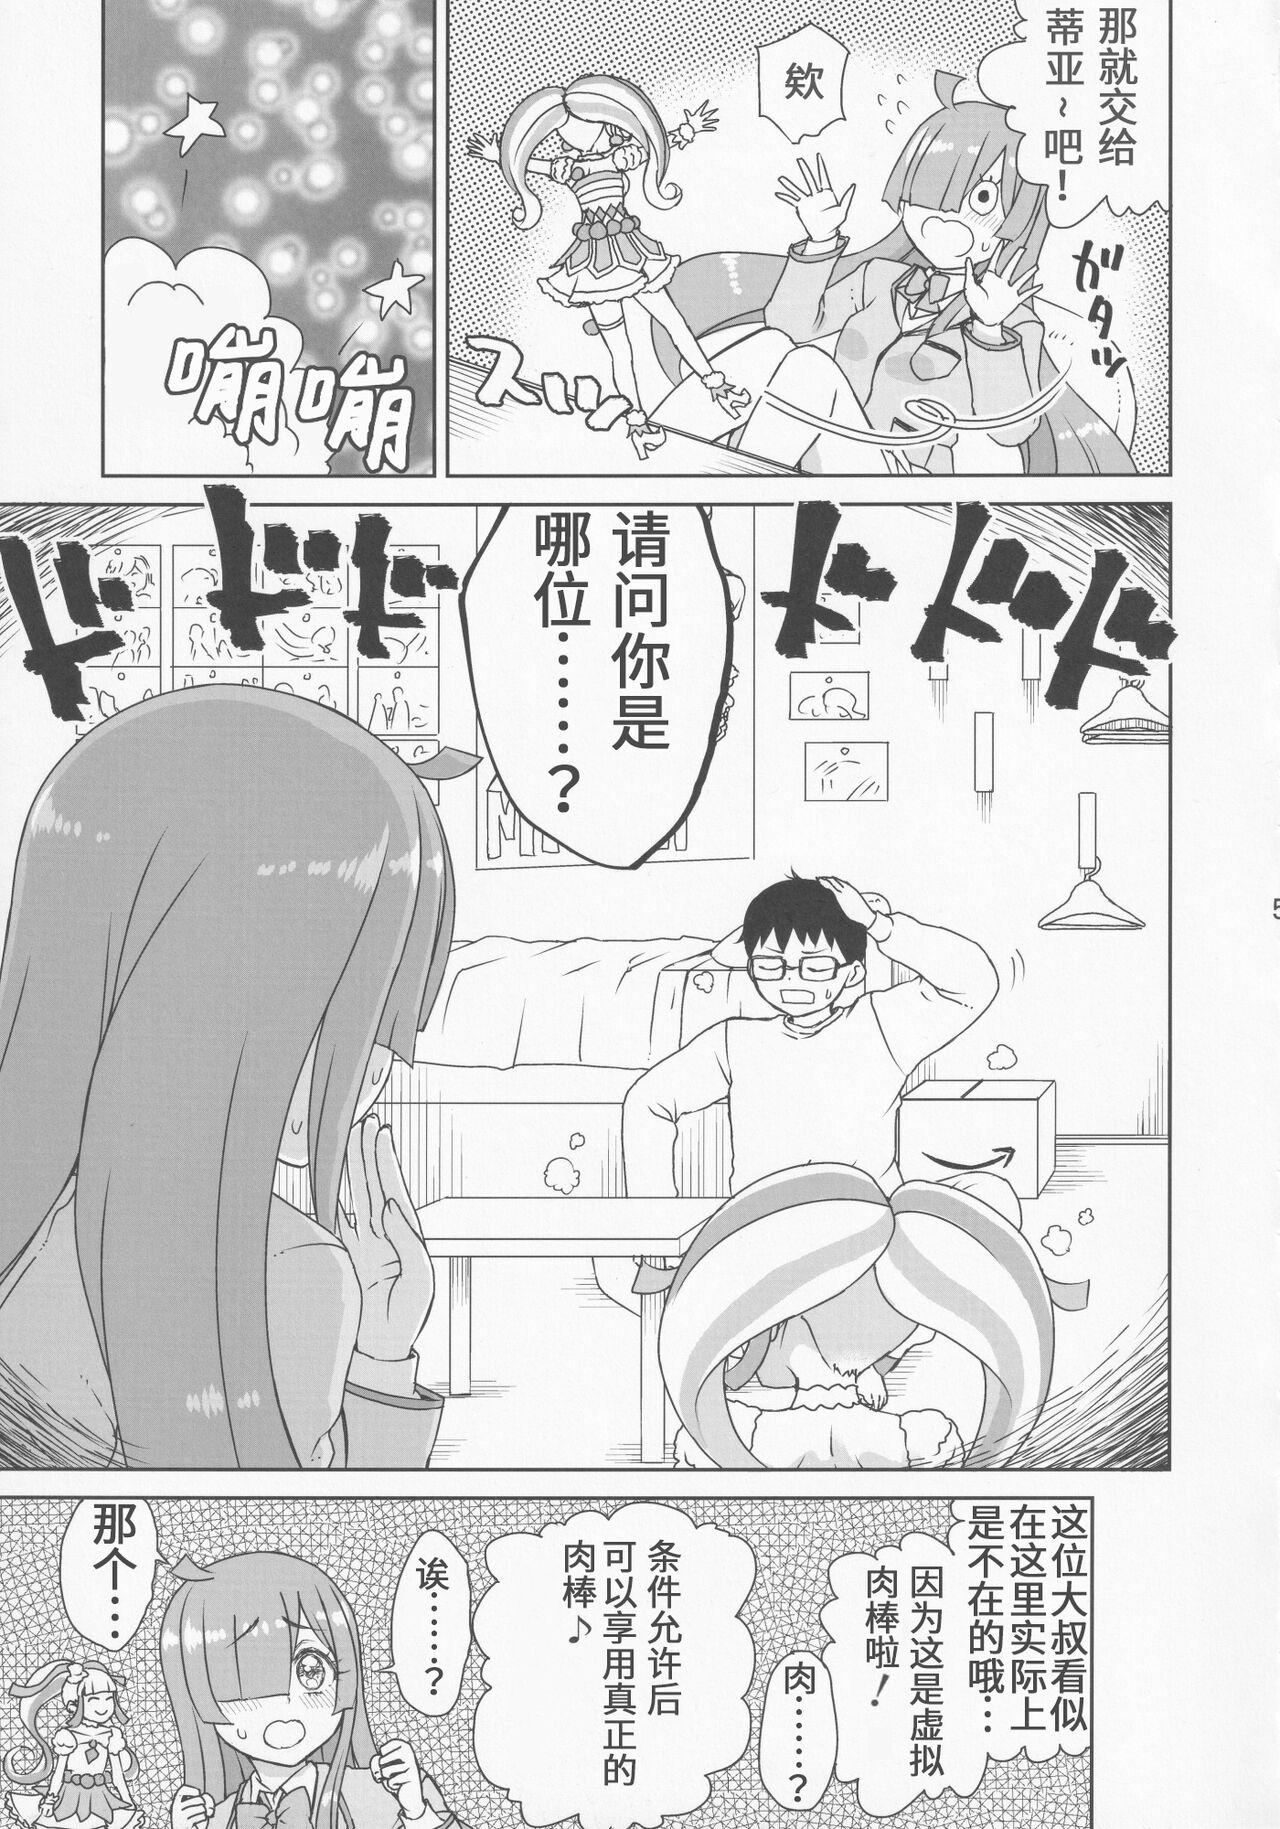 Dicks Kimi no Na wa - Kiratto pri chan Pussy Eating - Page 7